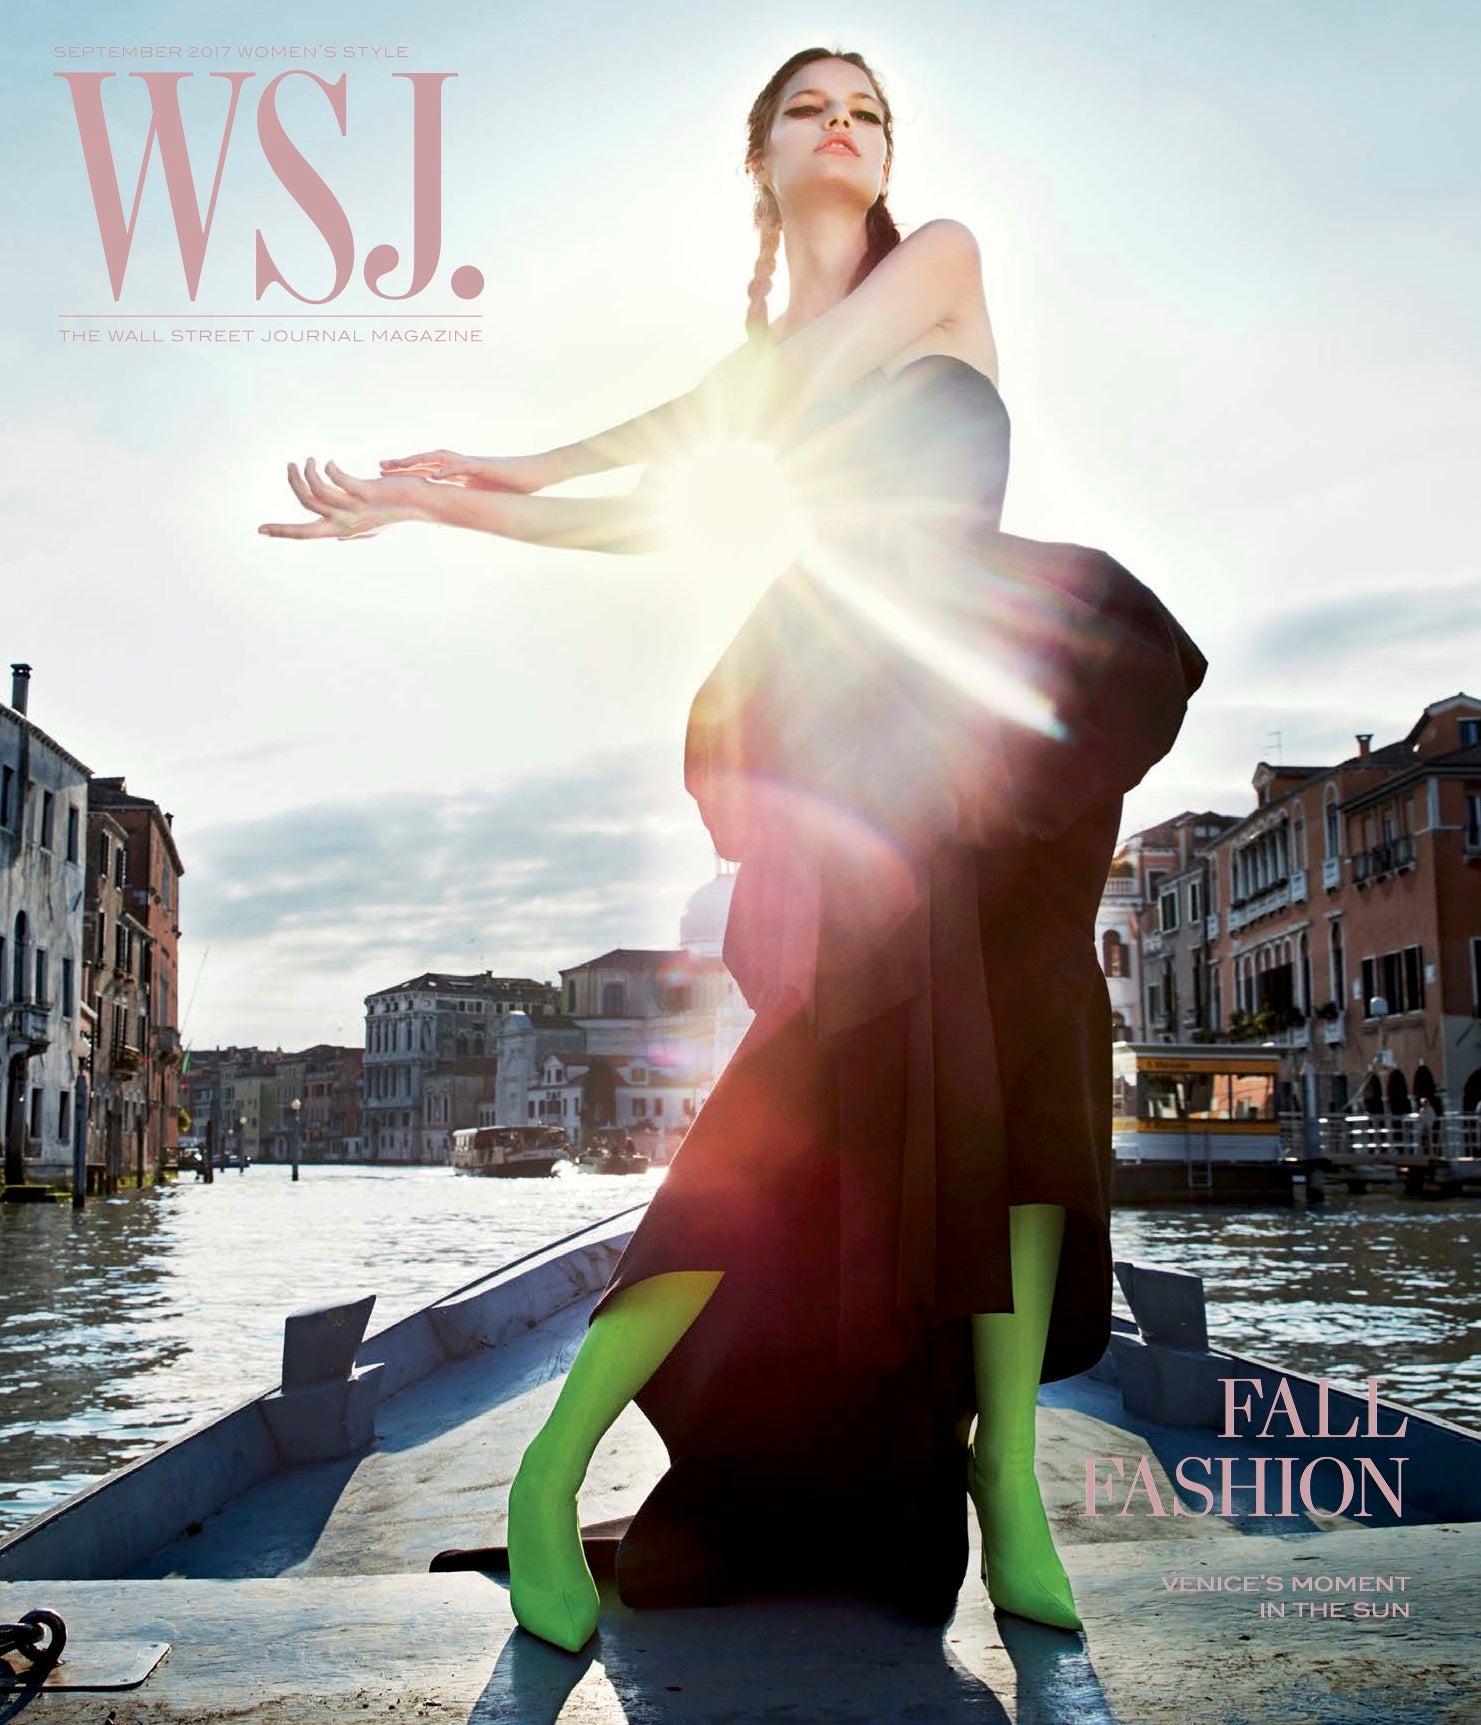 WSJ Magazine